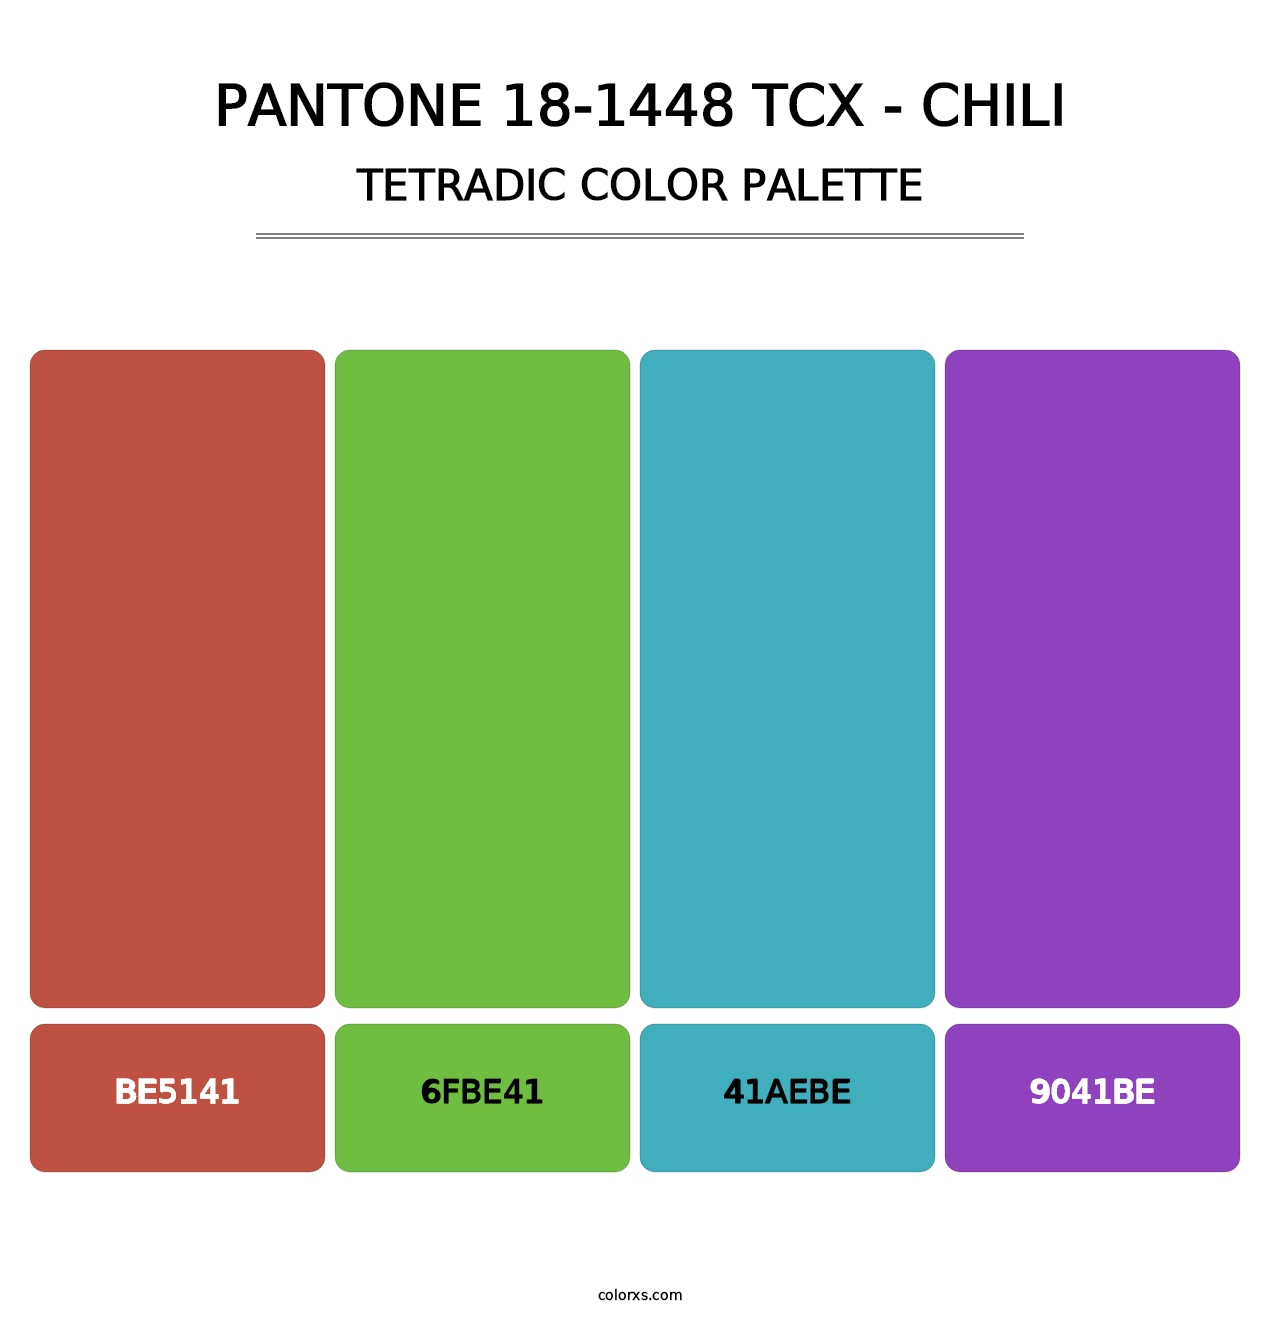 PANTONE 18-1448 TCX - Chili - Tetradic Color Palette